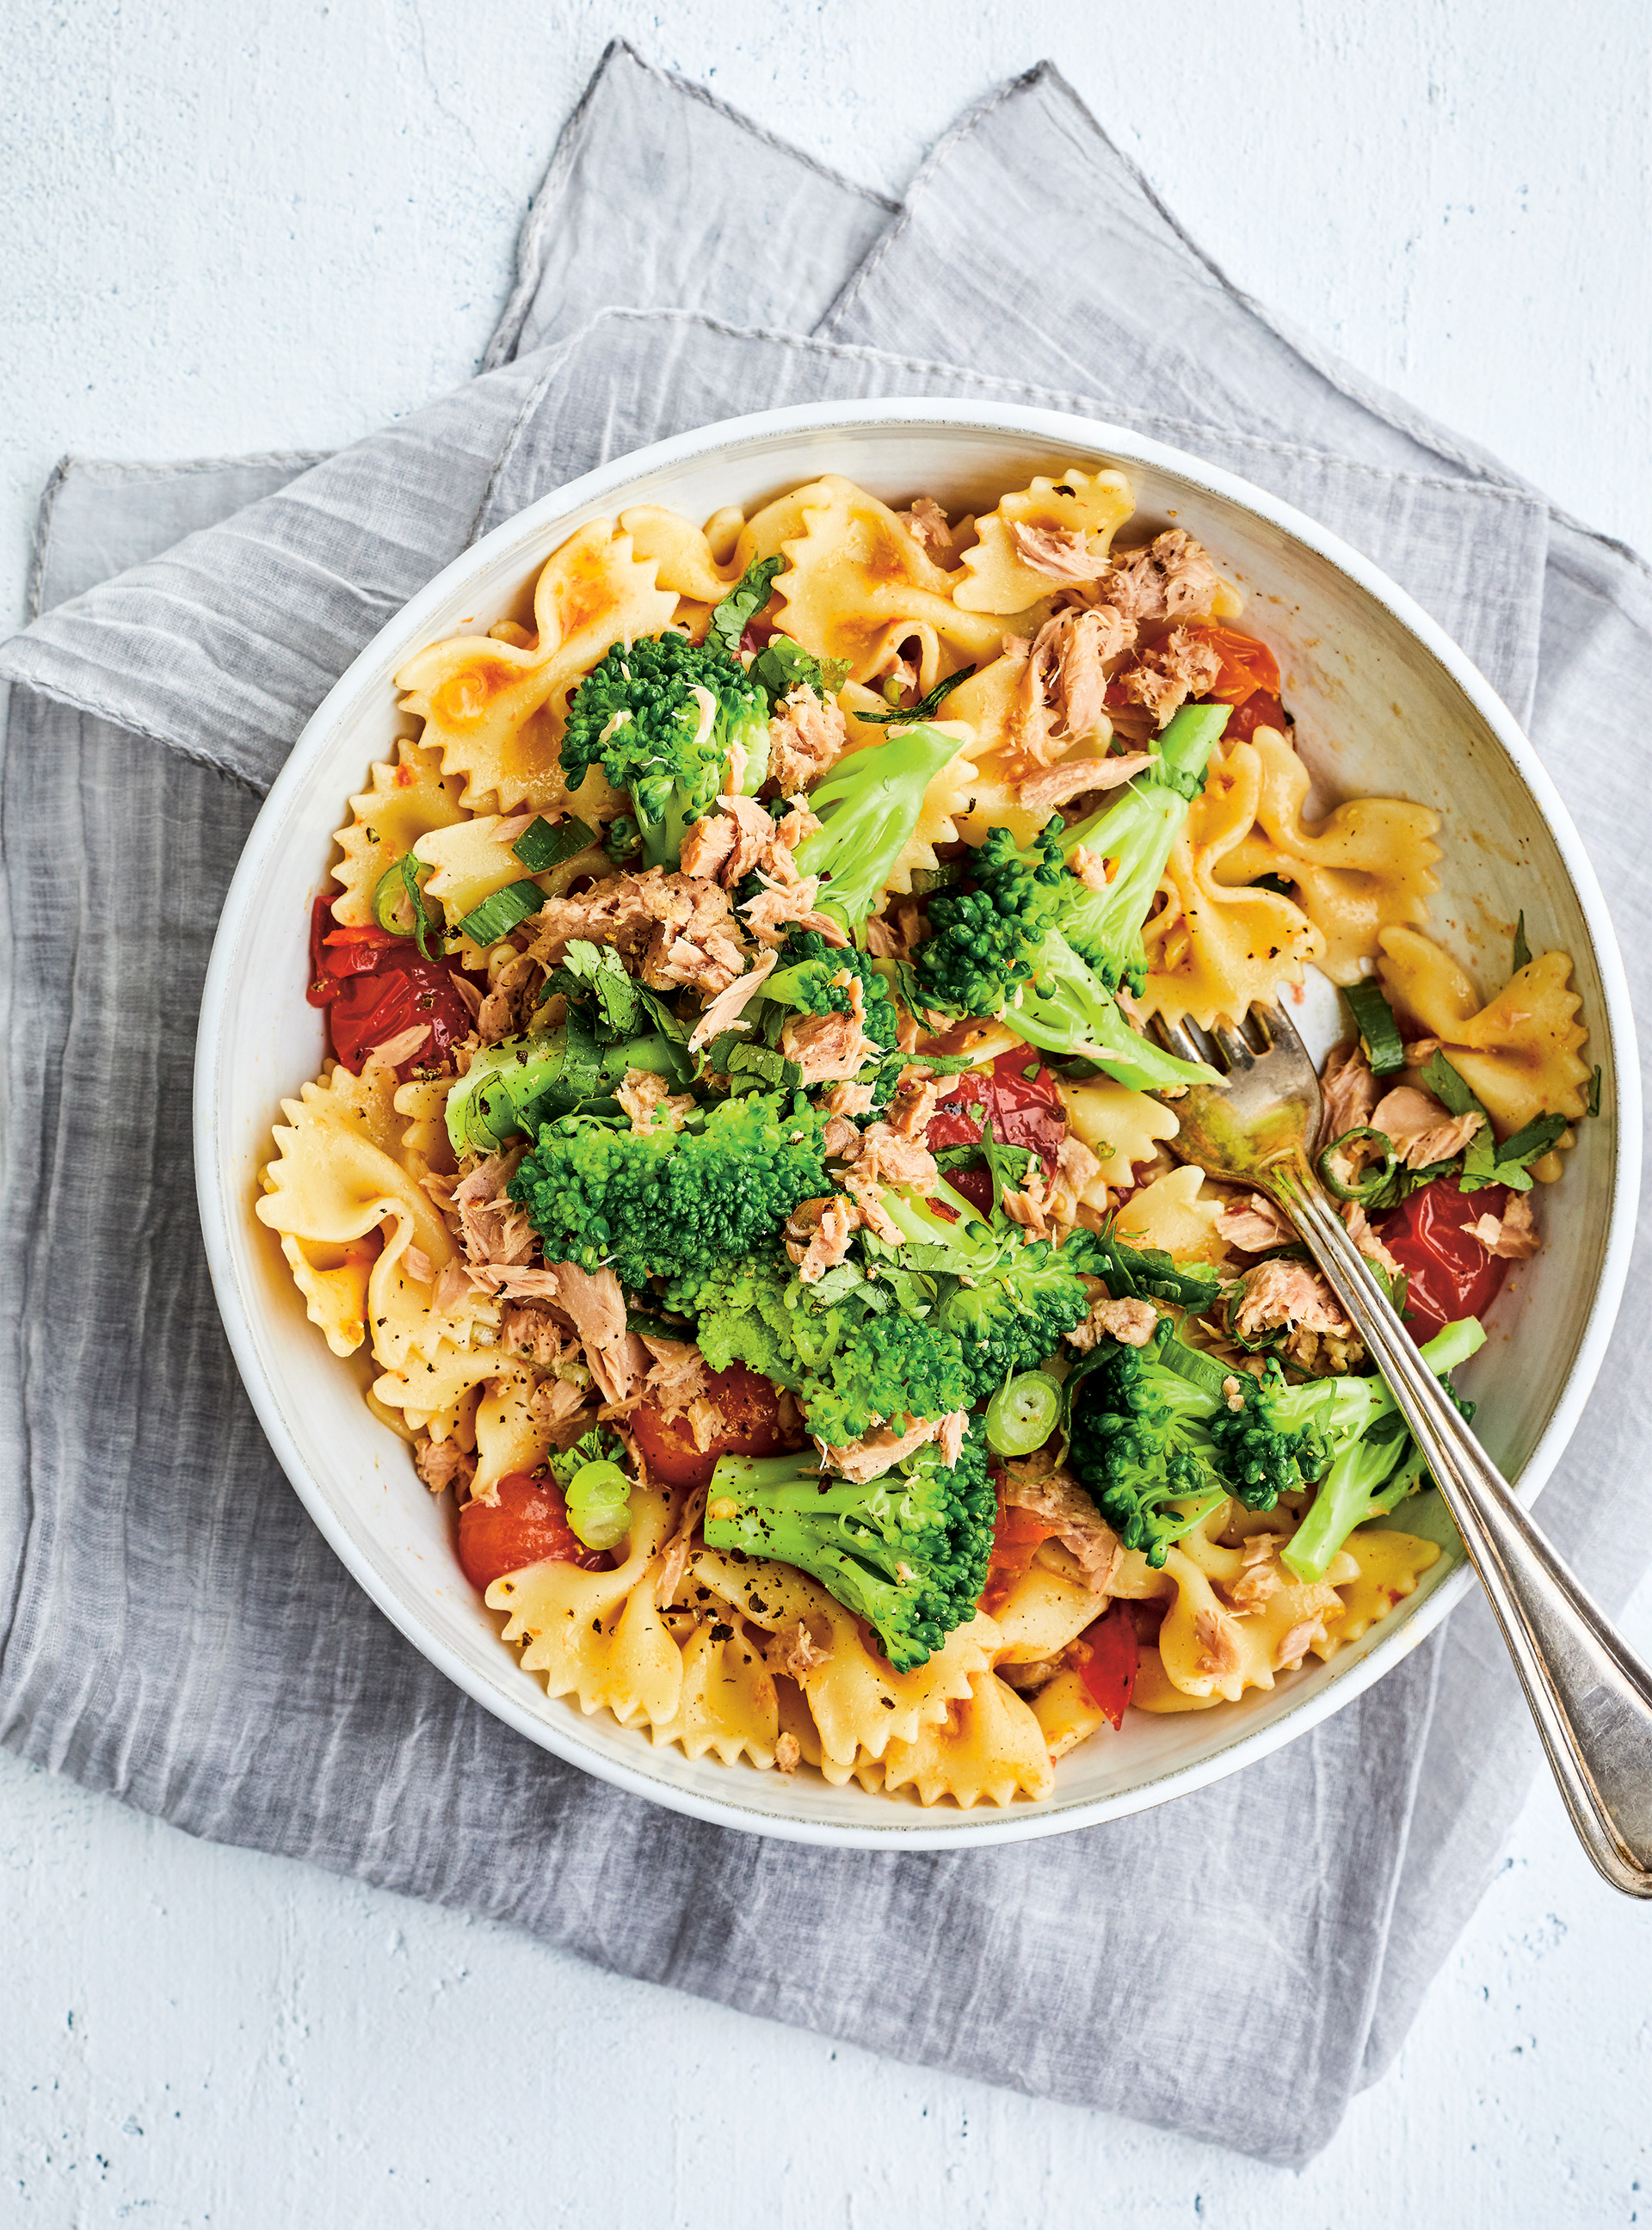 Warm Tuna and Broccoli Pasta Salad